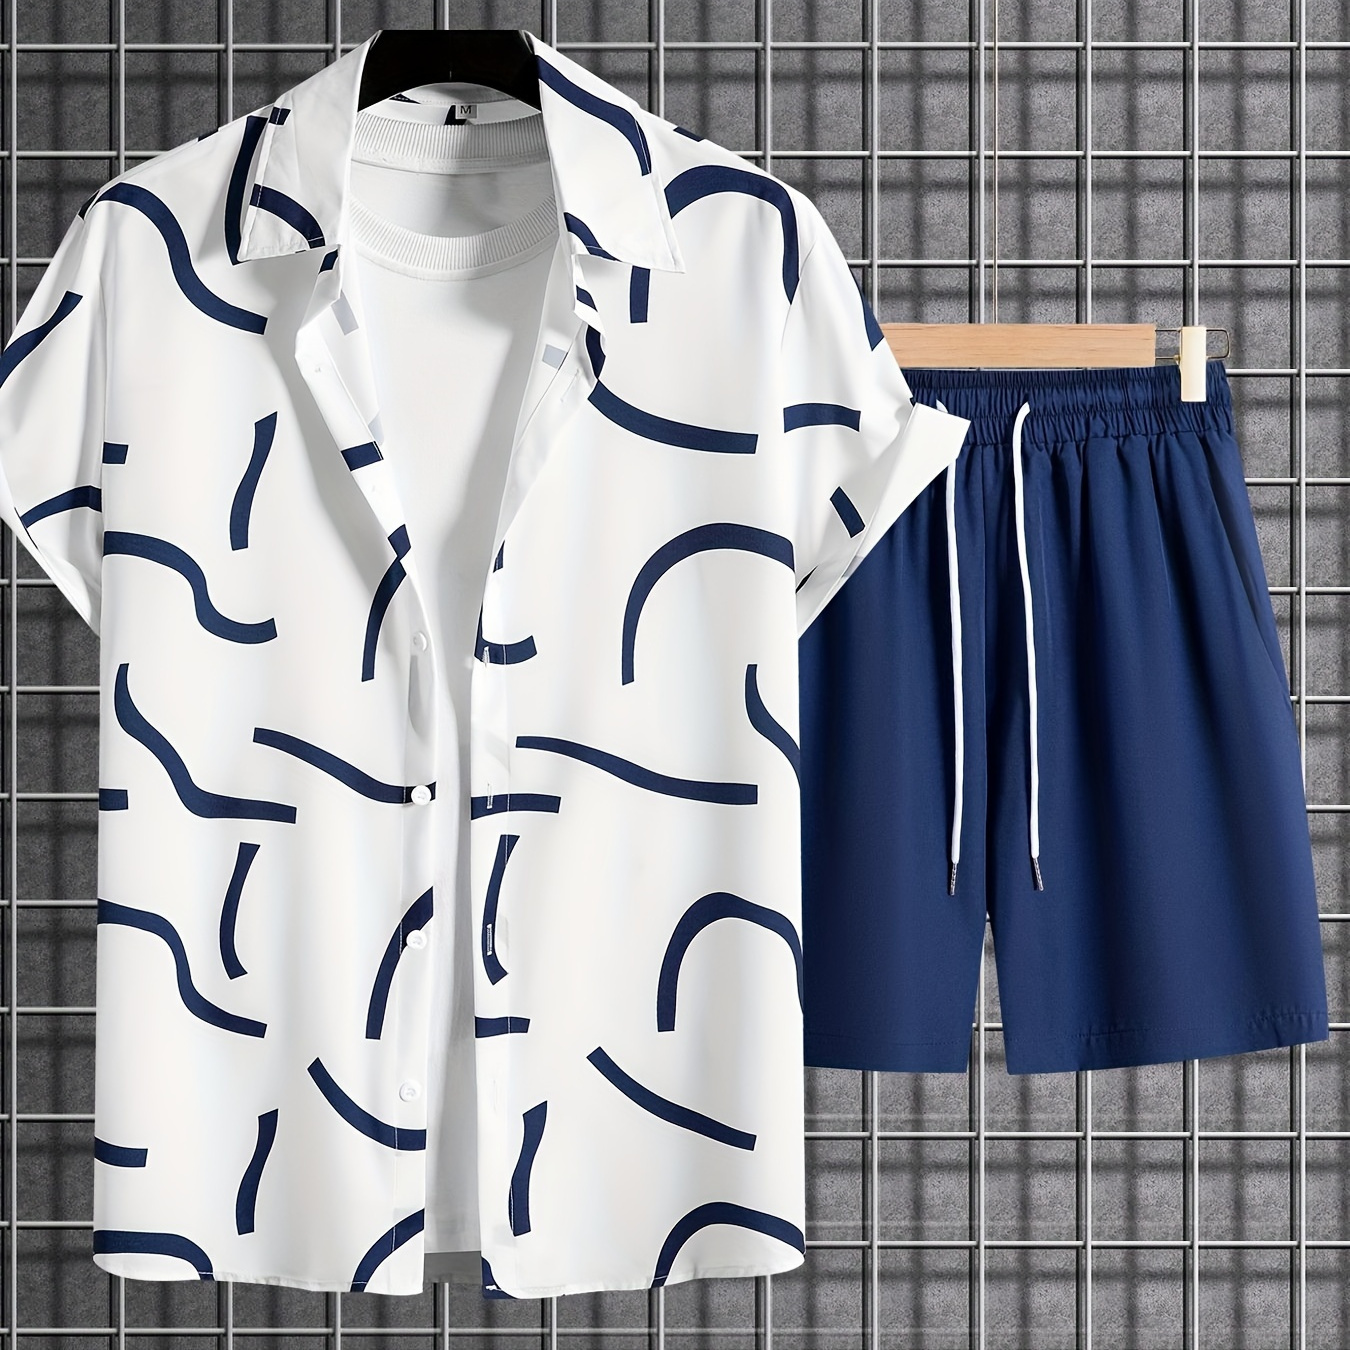 

2-piece Men's Casual Summer Vacation Outfit Set, Men's Abstract Random Print Short Sleeve Lapel Shirt & Solid Drawstring Shorts Set